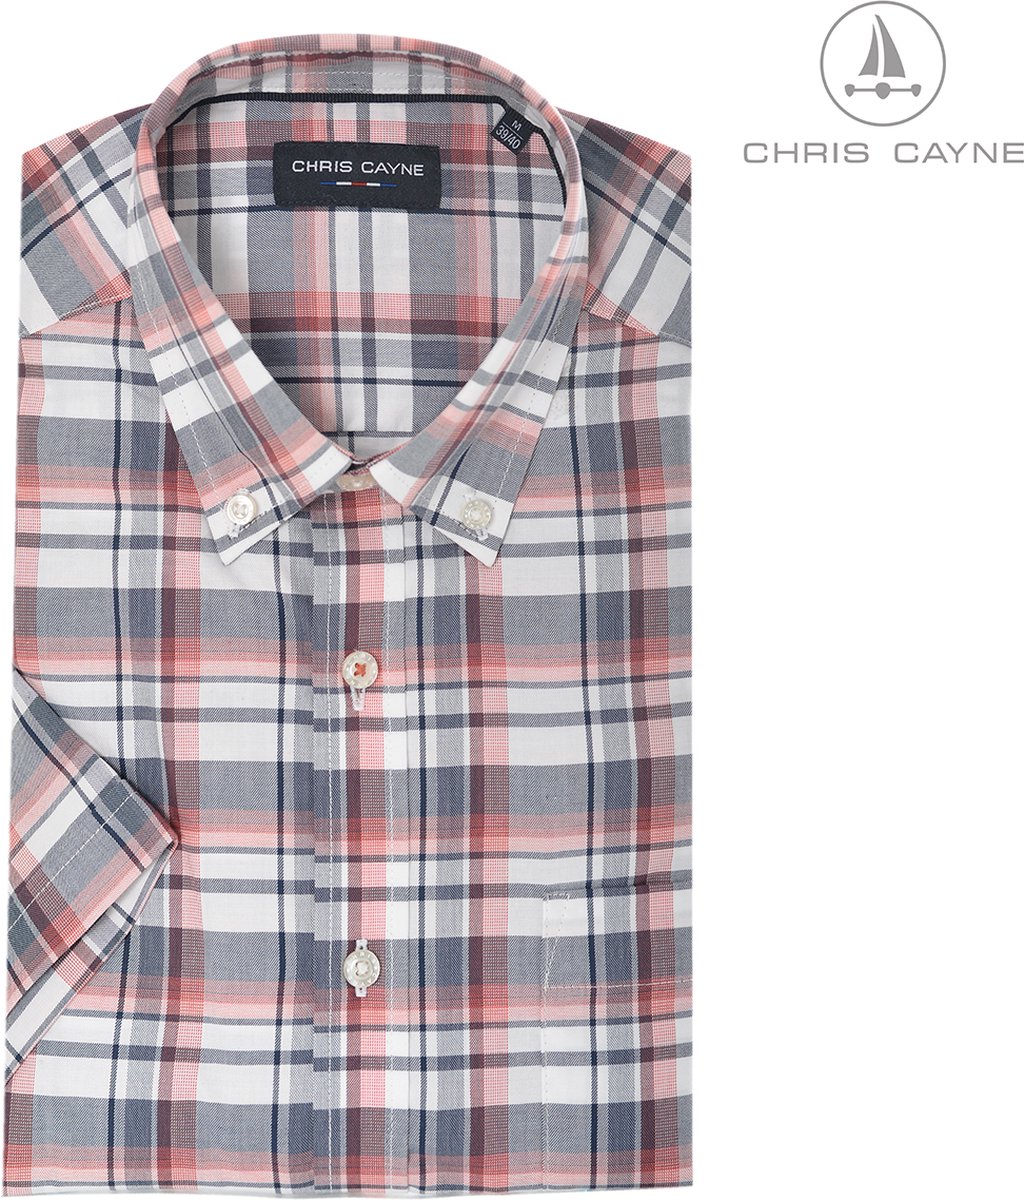 Chris Cayne heren blouse - overhemd 2210 wit/roze/grijs ruit - KM - maat XL